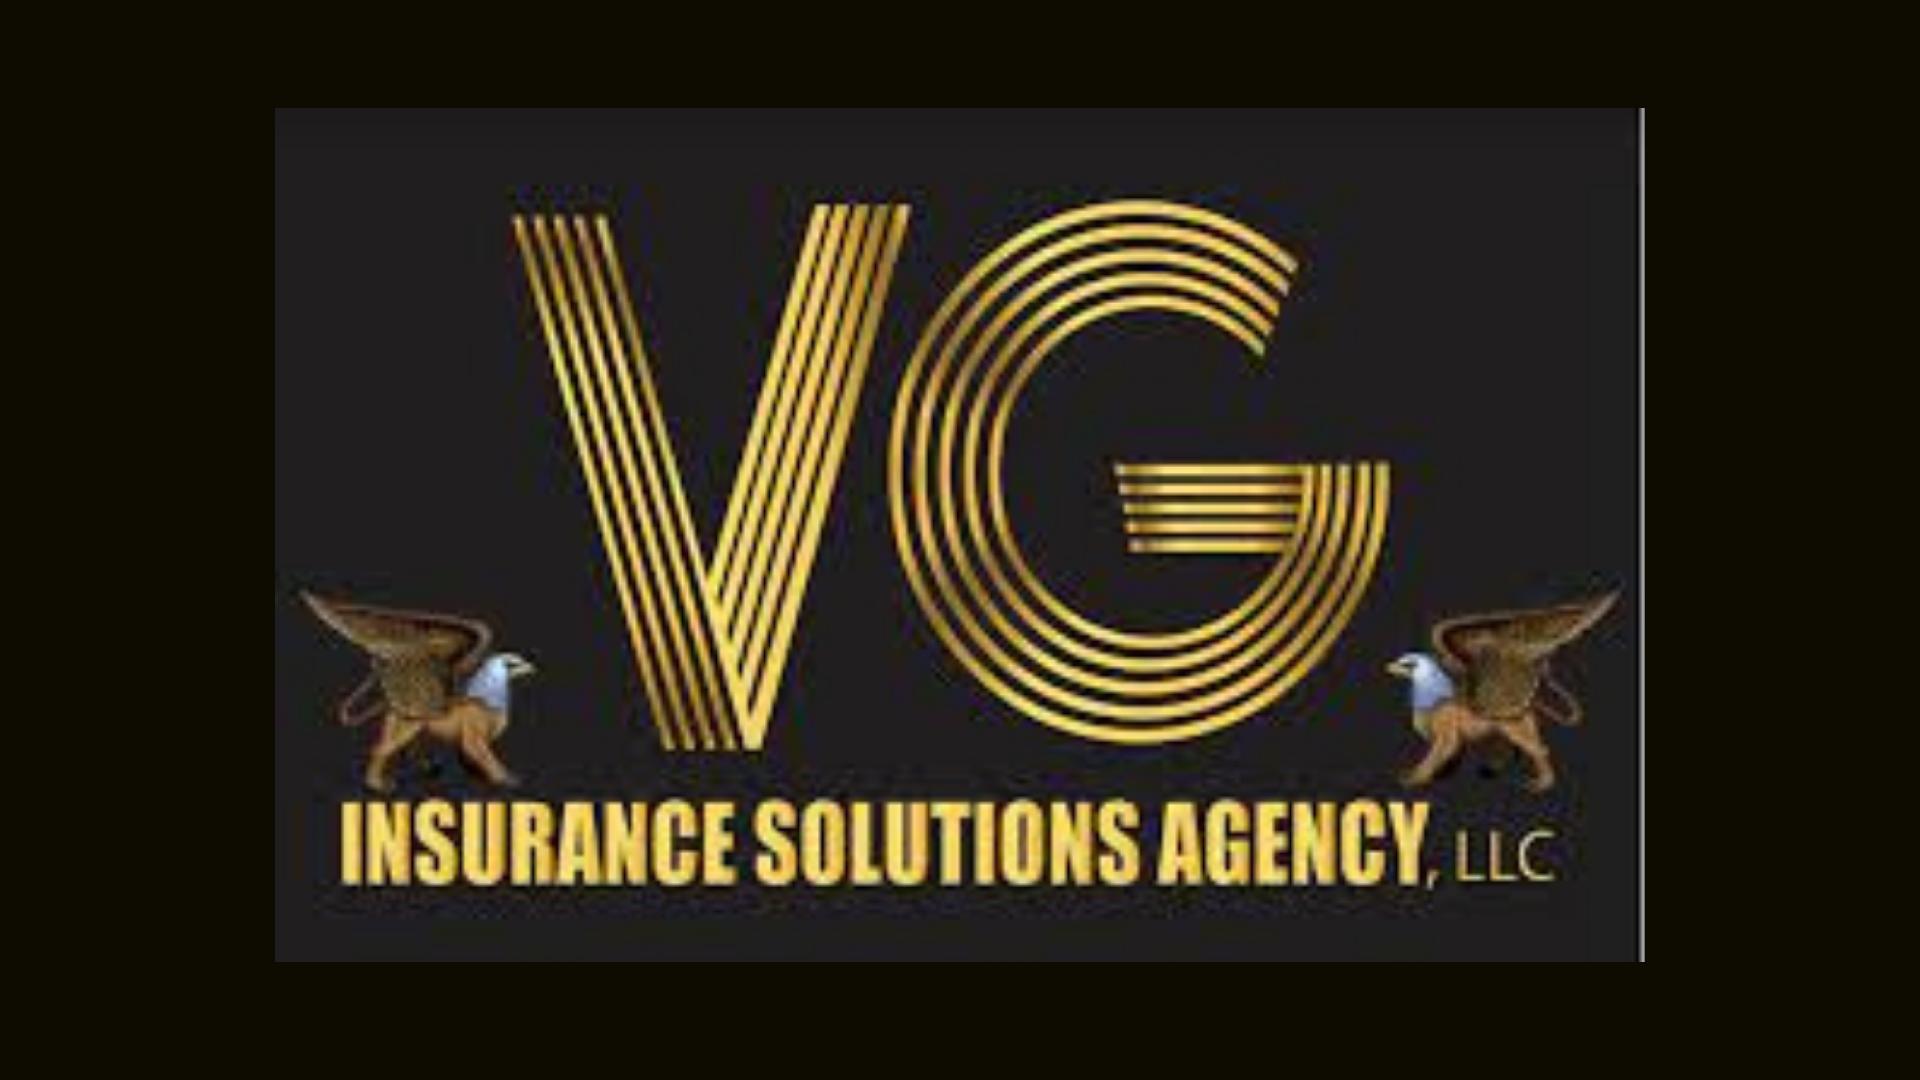 VG Insurance Solutions Agency